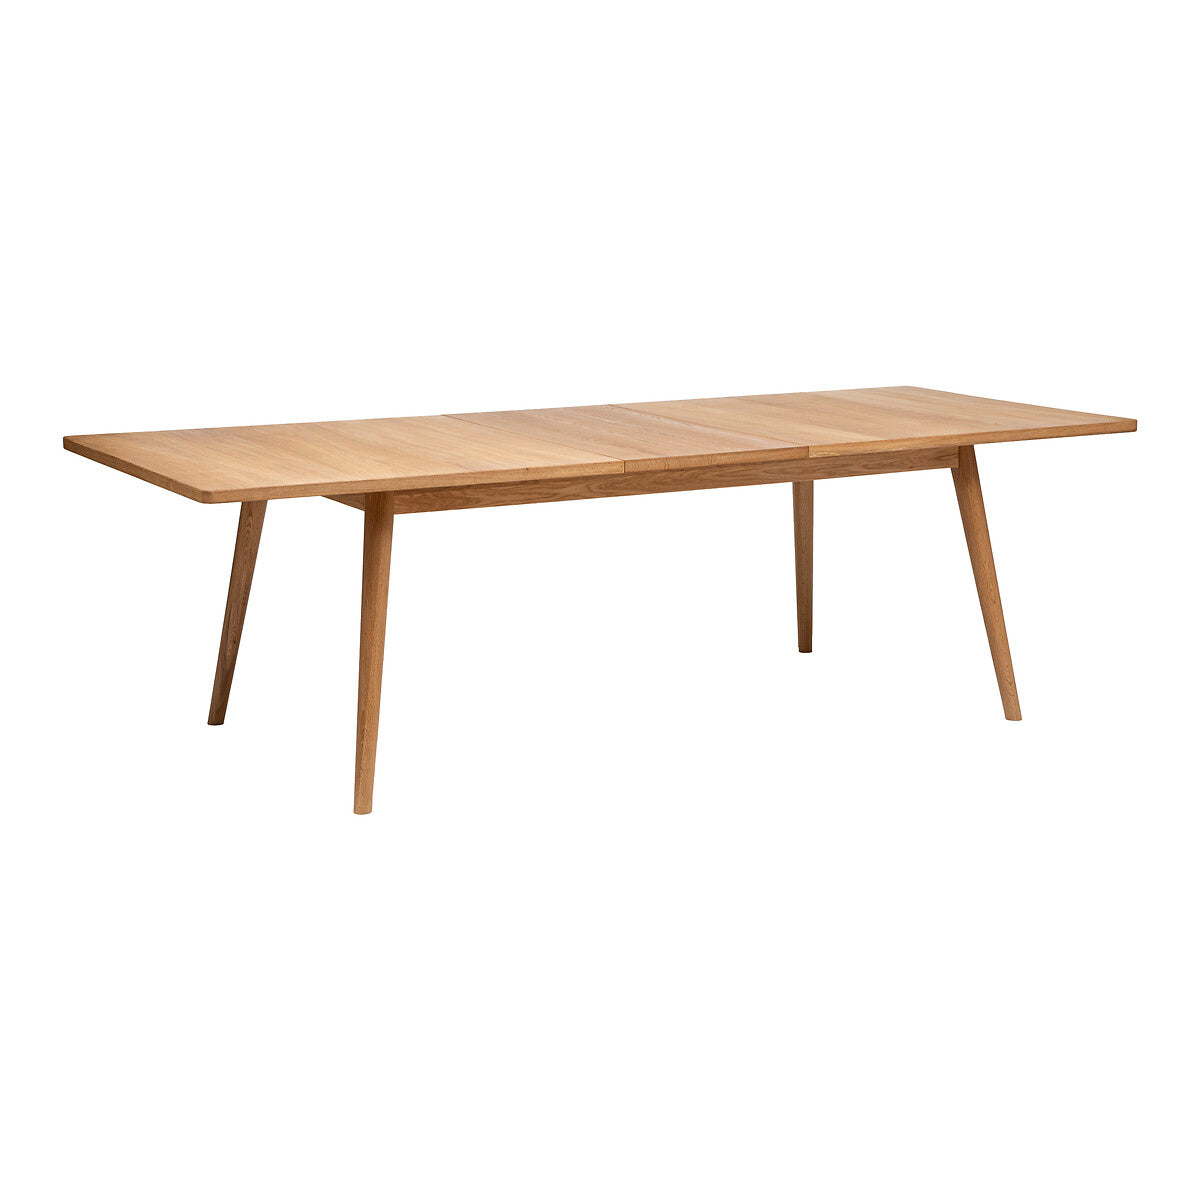 BEAU Finn oak extendable dining table - L200-250xD100xH75cm - Brown